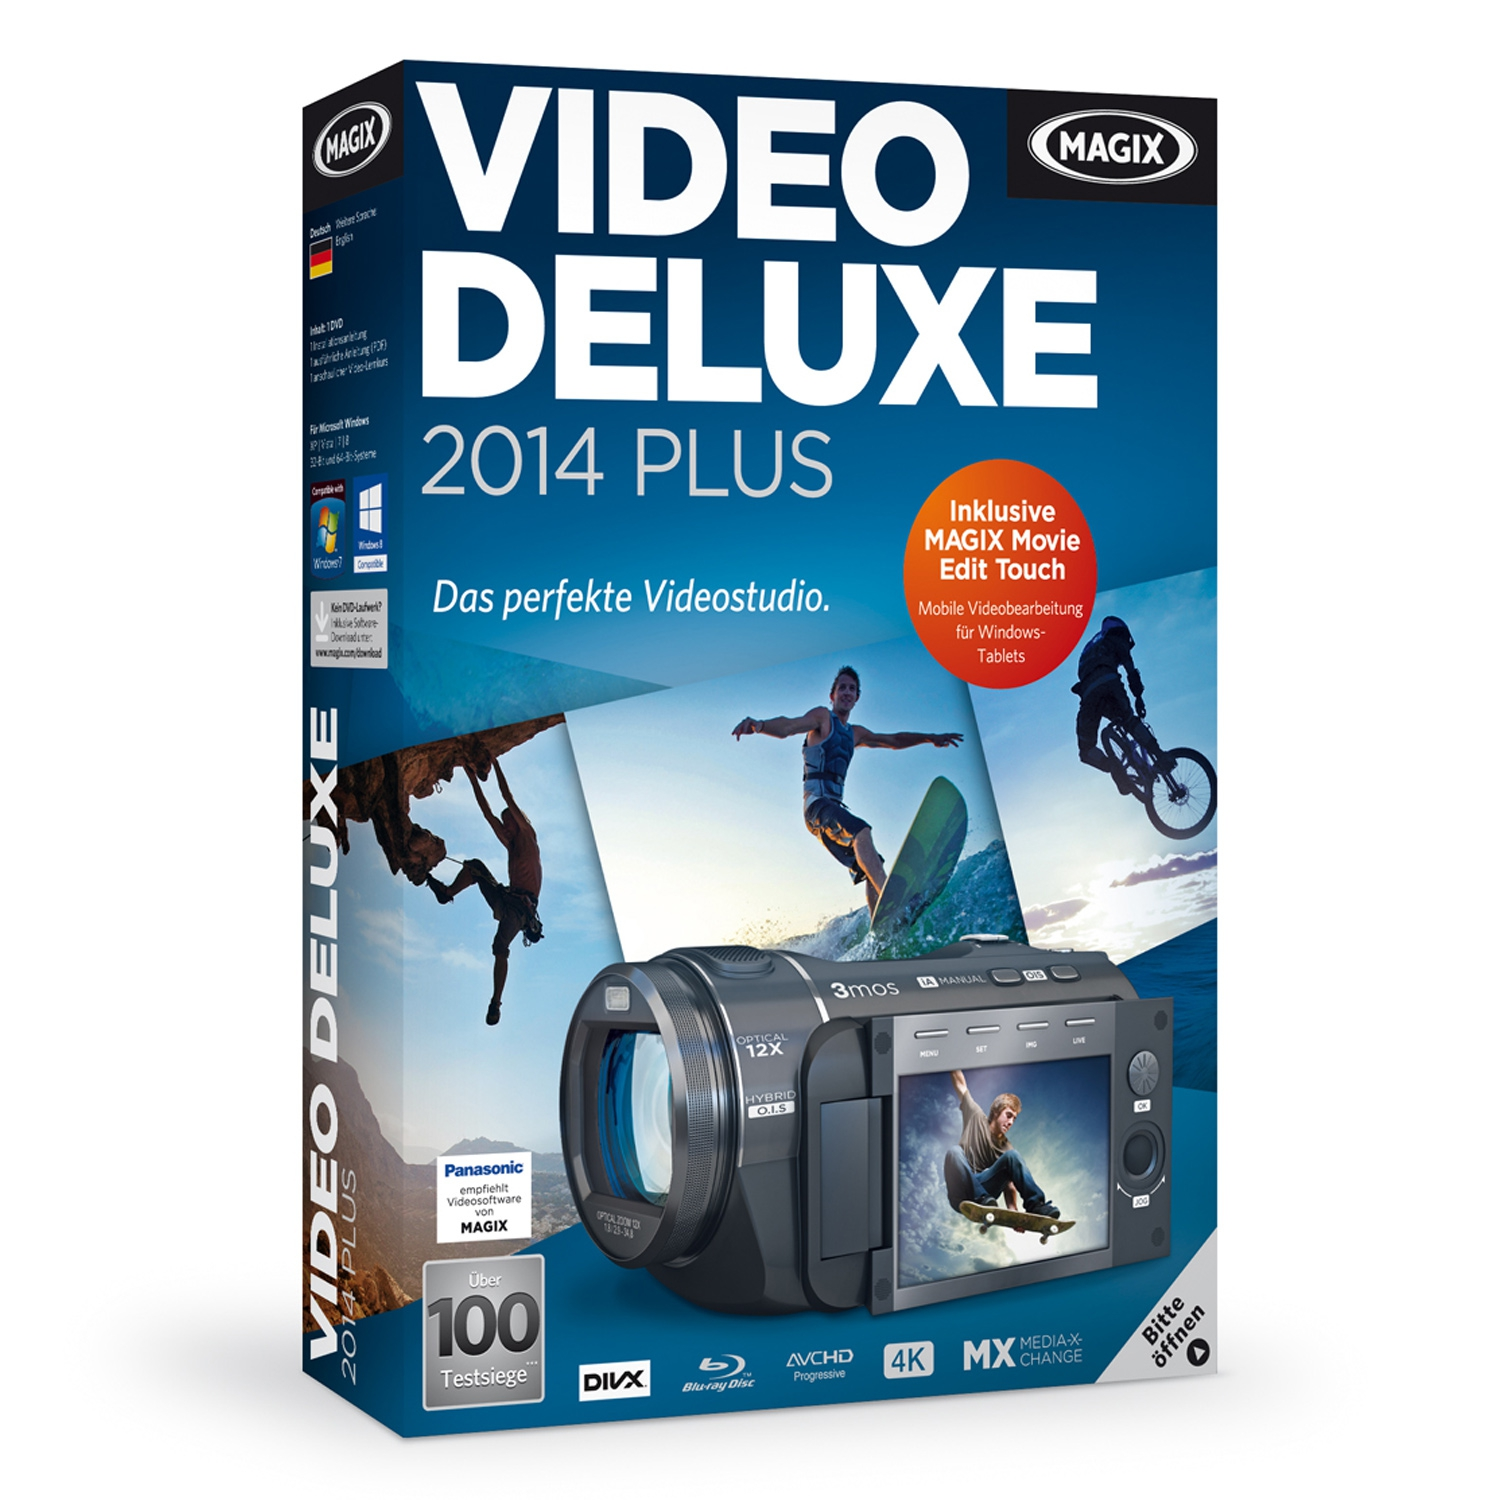 MAGIX Video deluxe 2014 Plus EAN: 4017218774209 EAN POSA: 4017218774506 EVP: 99,99 Inhalt: 1 DVD Verpackung: 190 x 135 x 32 mm, Einfachflap VÖ: 30.08.